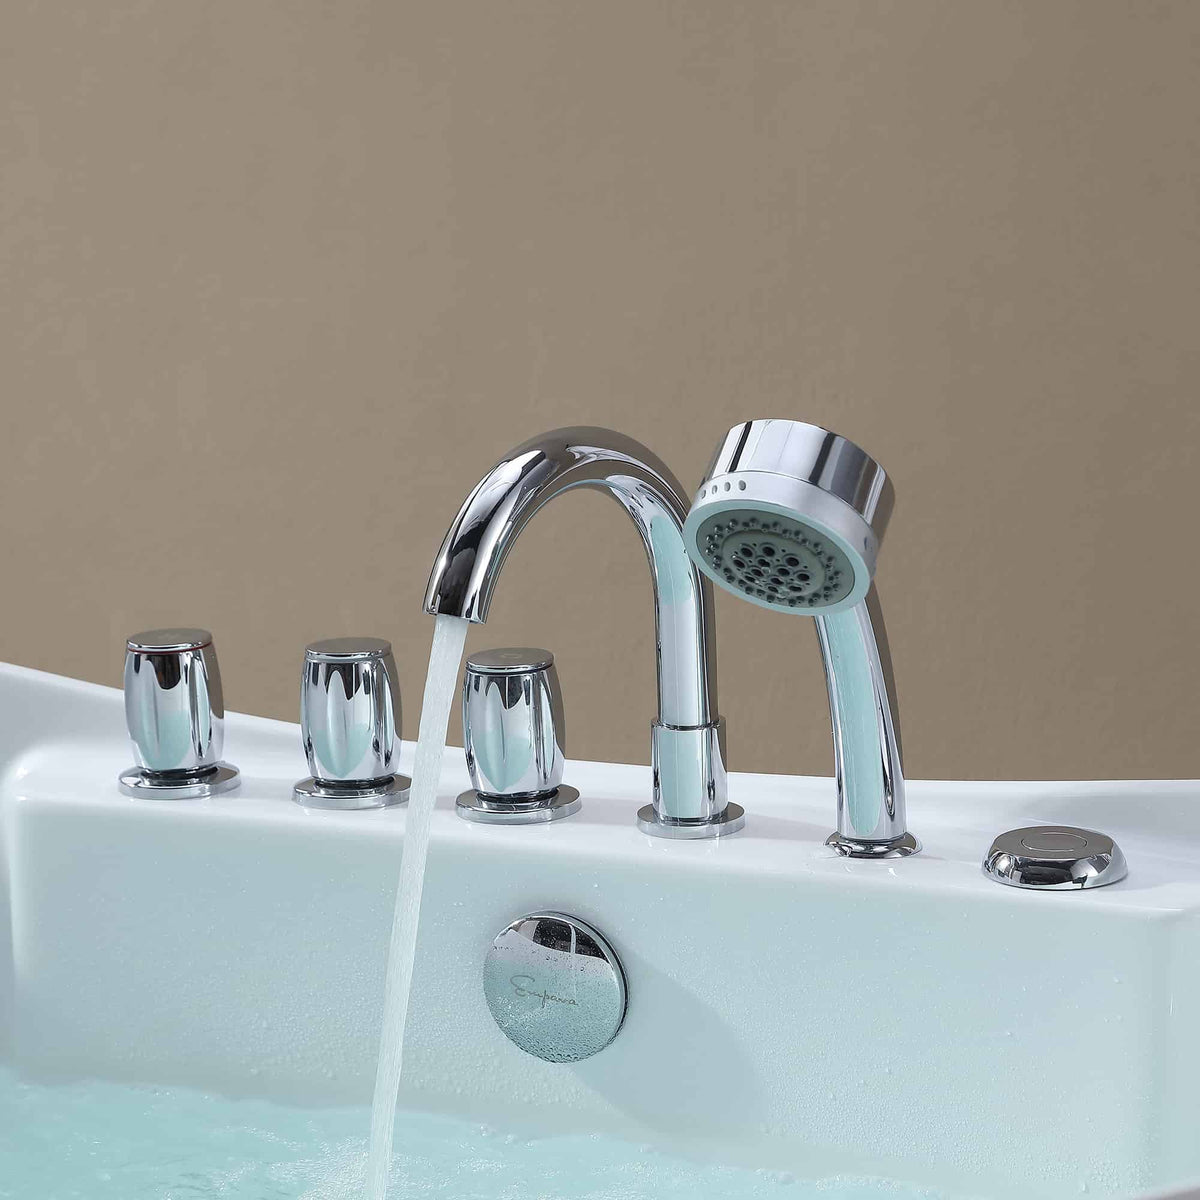 Empava 67 in. Whirlpool Freestanding Acrylic Bathtub | EMPV-67AIS10